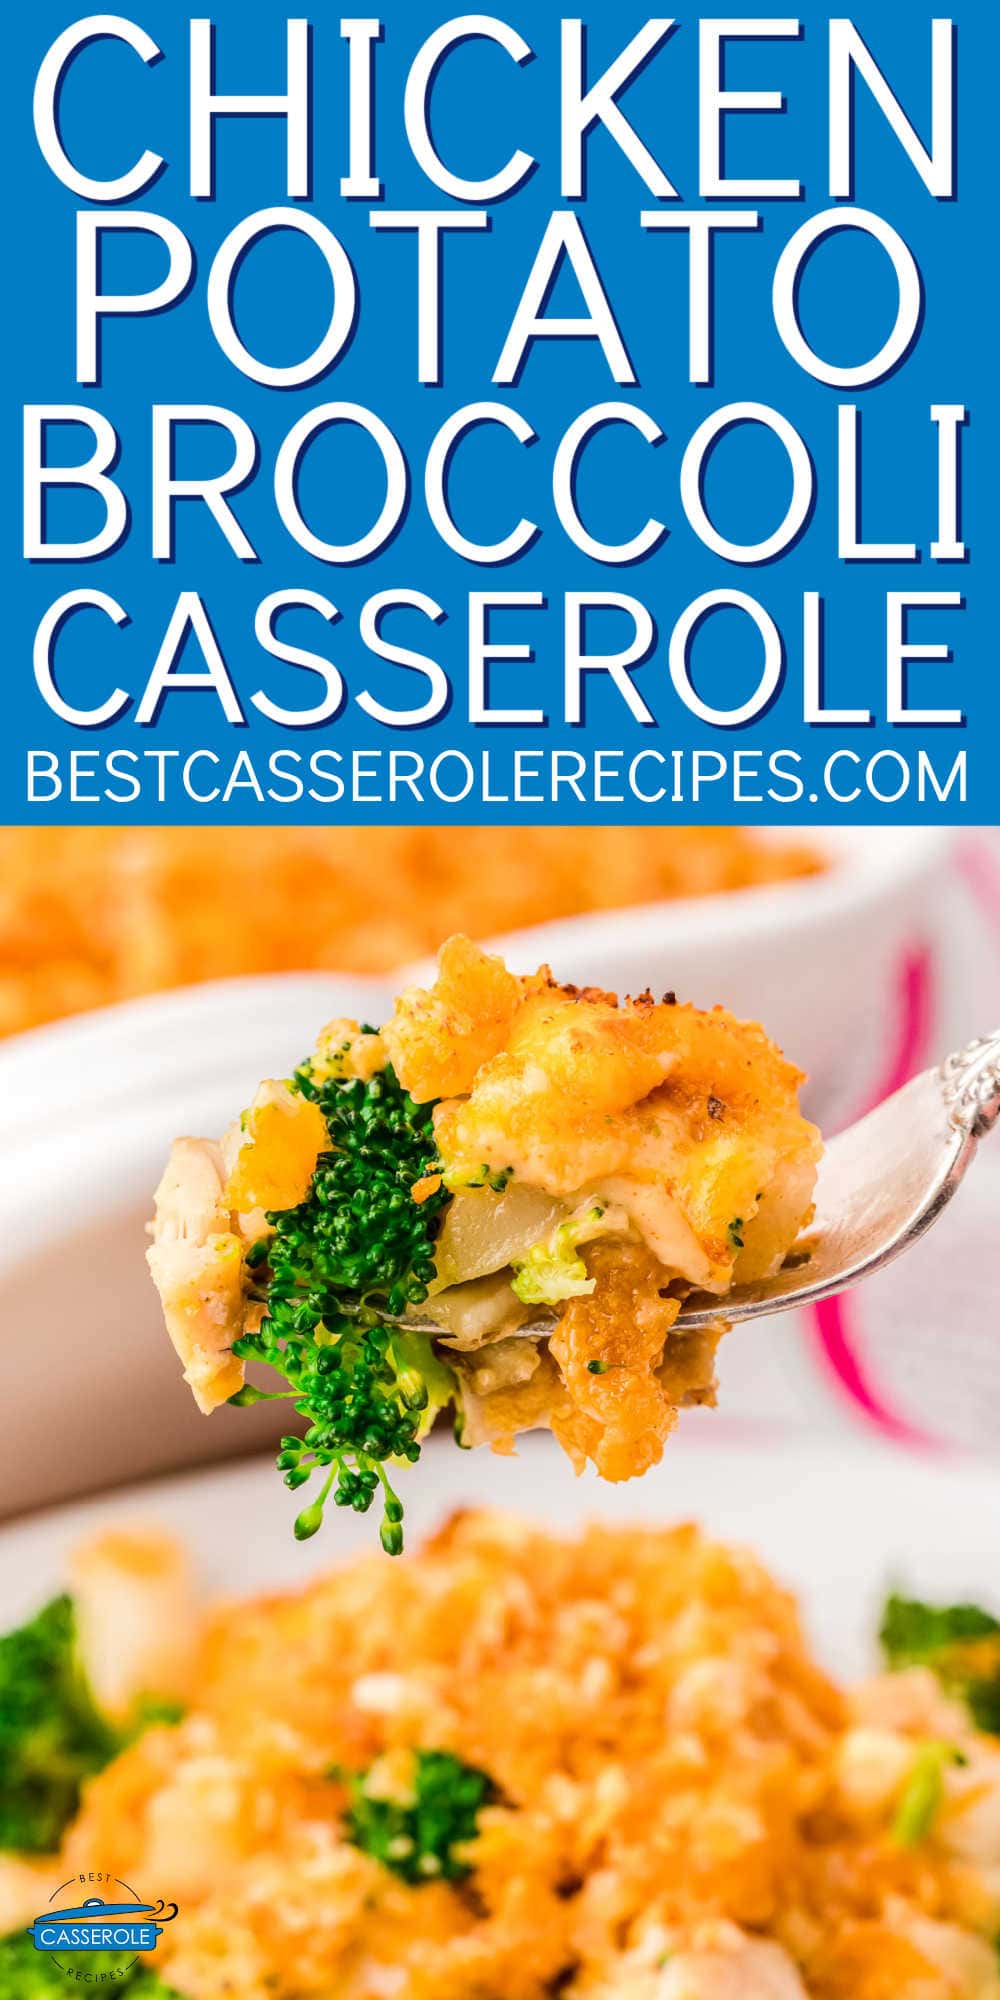 fork holding a bite of chicken broccoli potato casserole with blue banner and text BestCasseroleRecipes.com